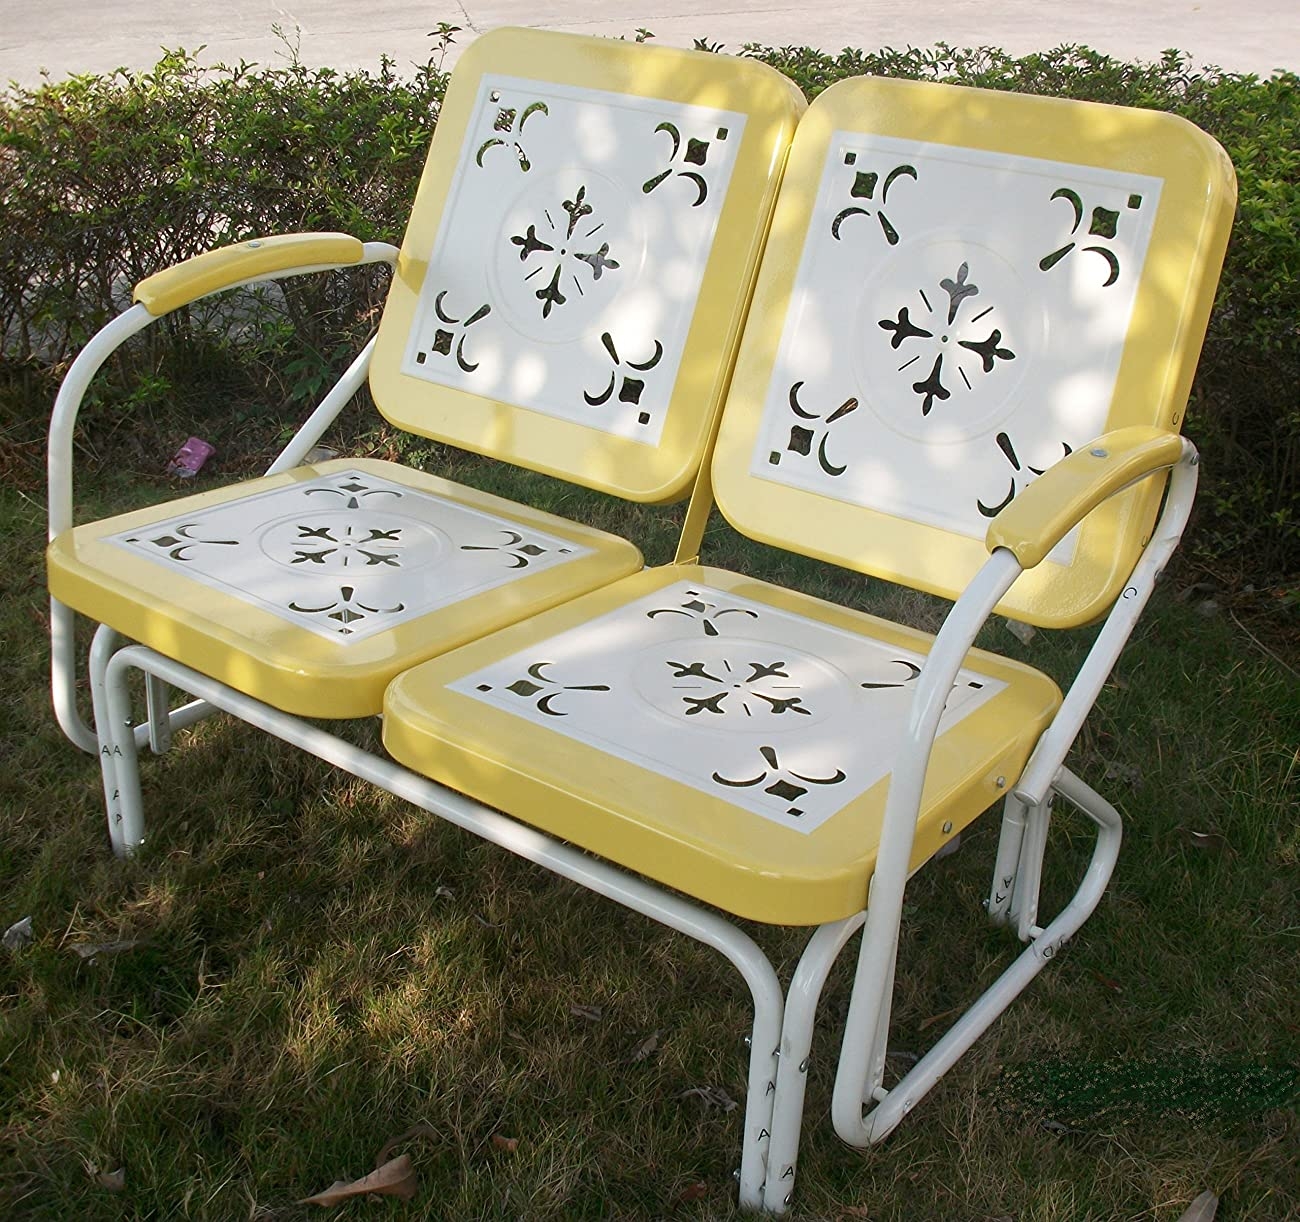 Vintage Metal Lawn Chairs Visualhunt, Vintage Metal Outdoor Patio Chairs